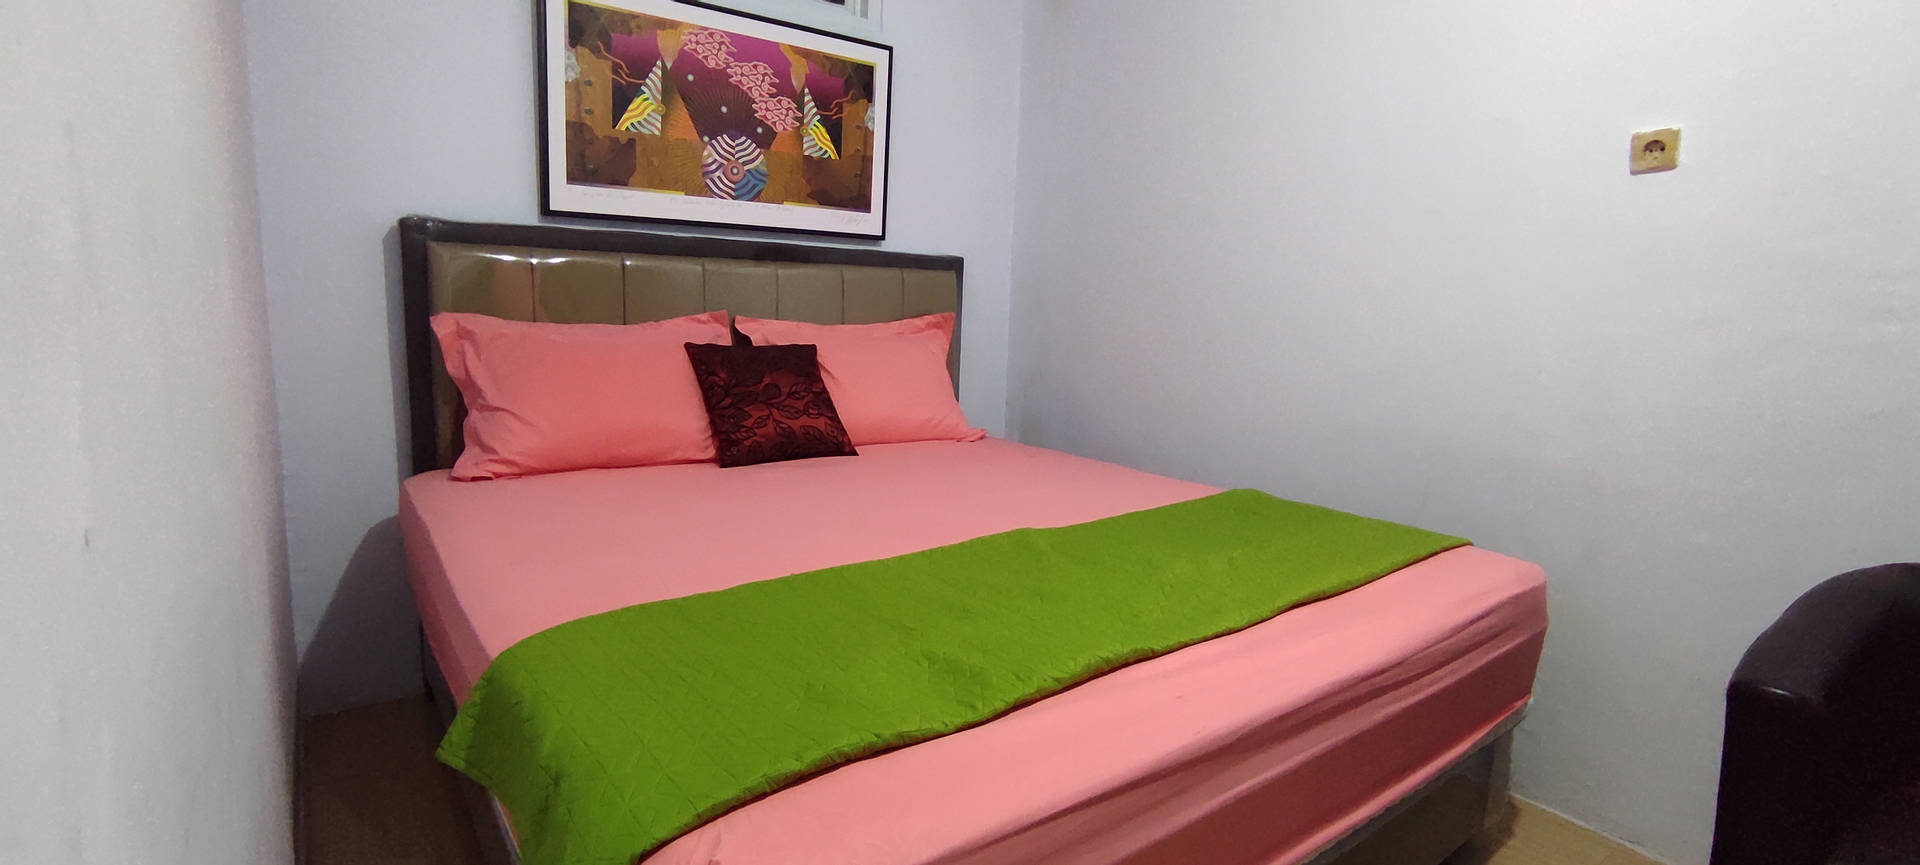 Bedroom 4, AR20 Guest House & Resto, Majalengka